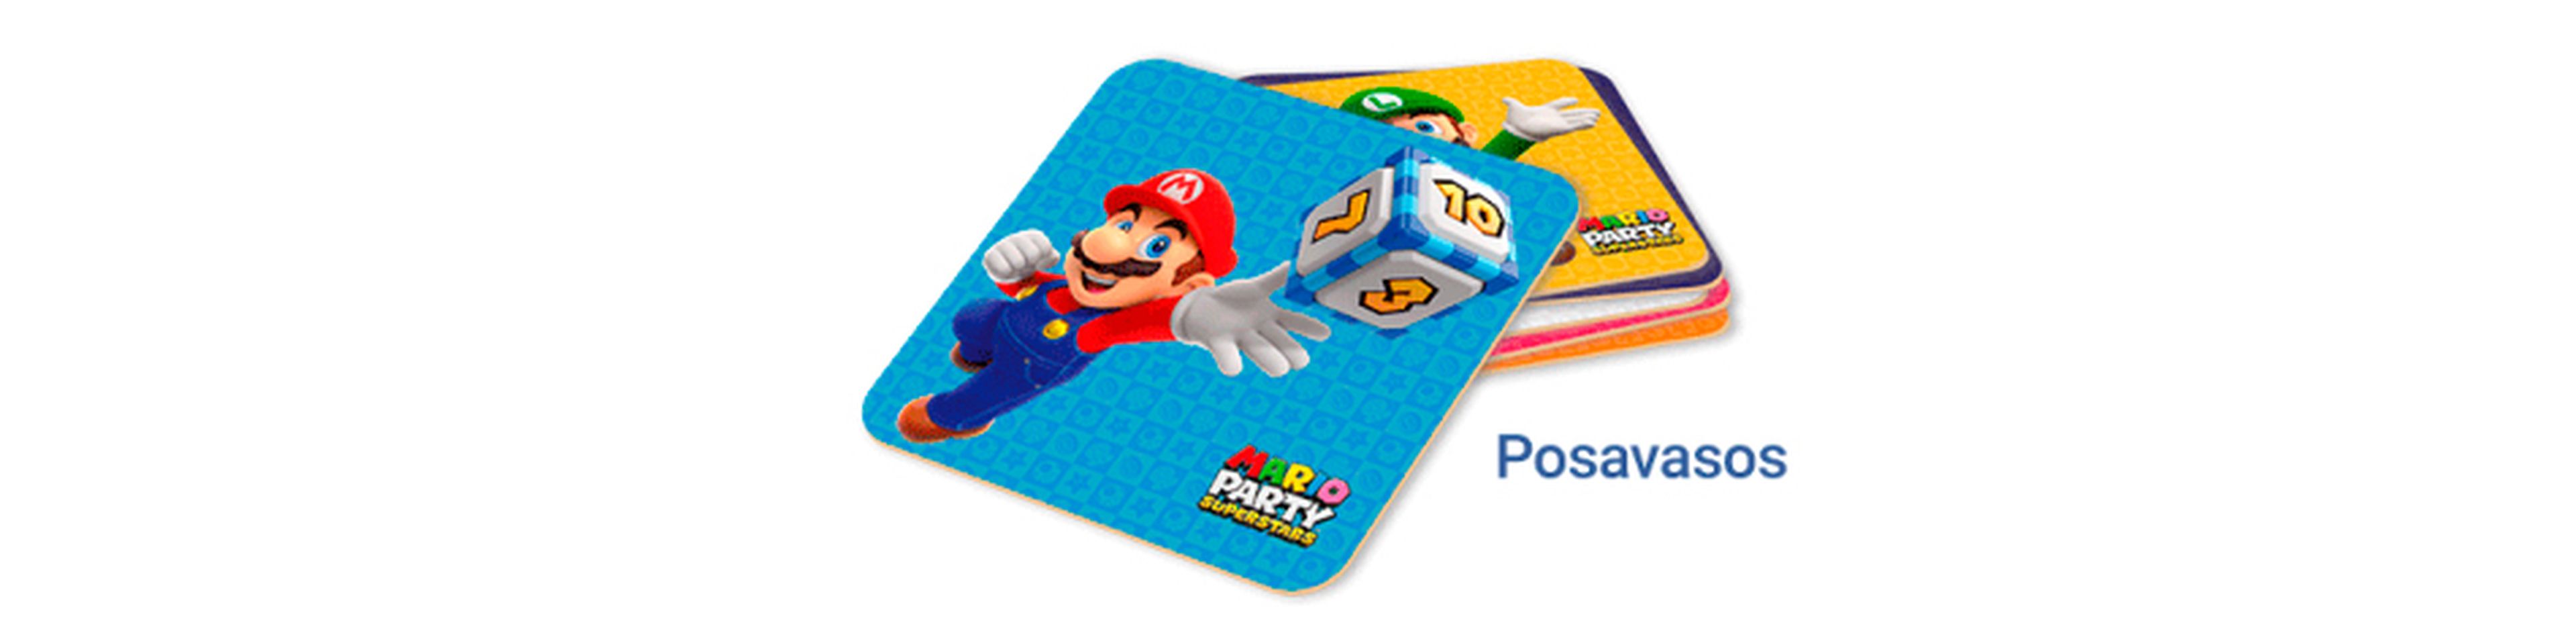 Mario Party Superstars posavasos GAME